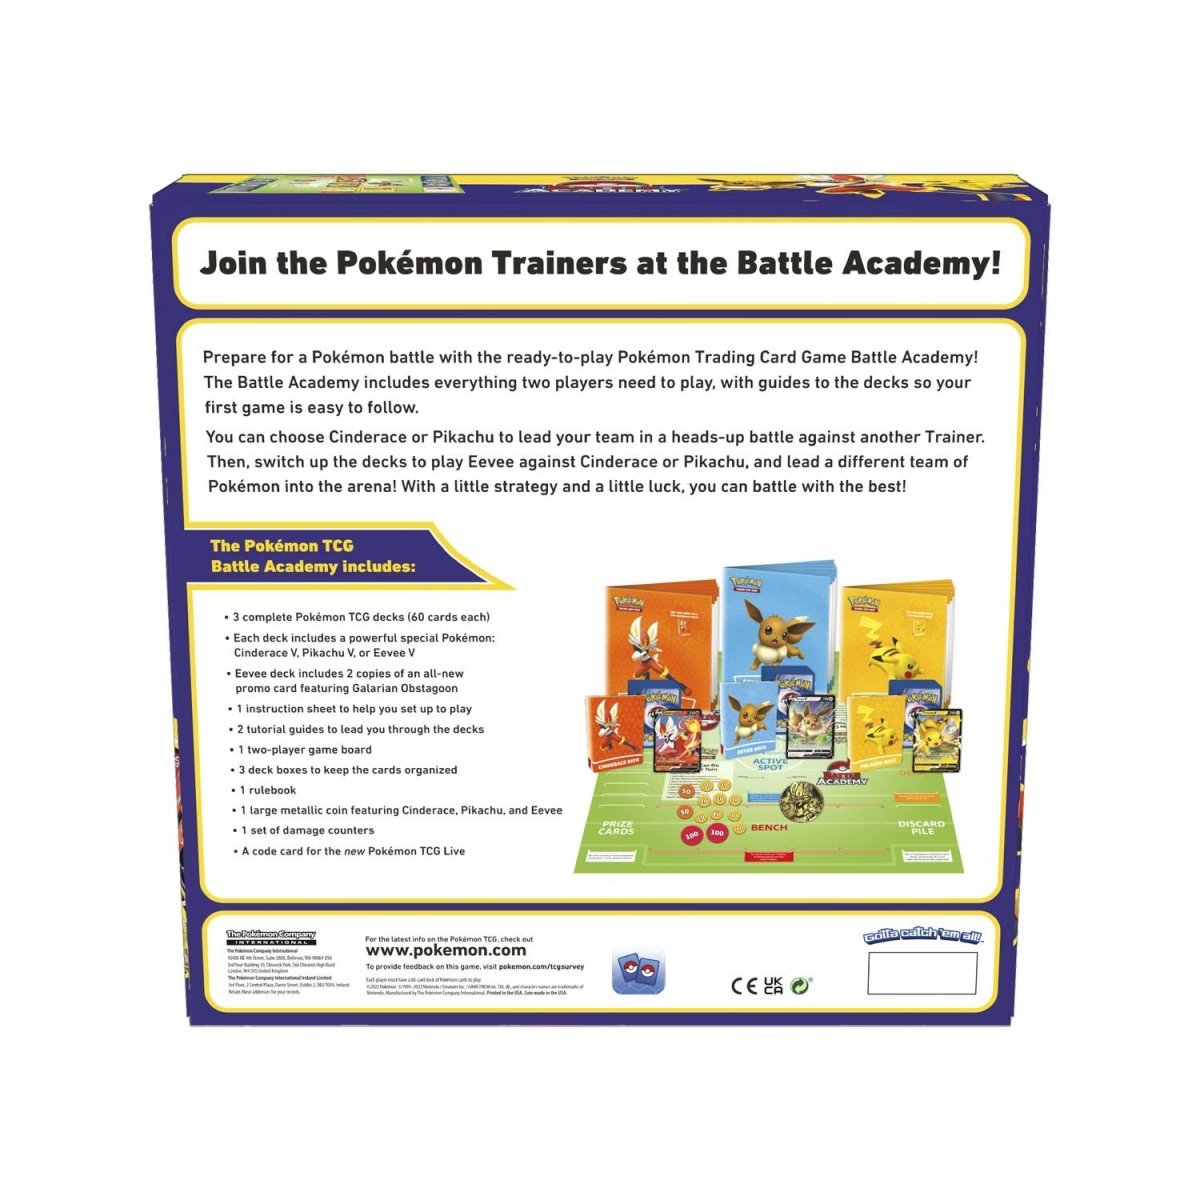 Pokémon TCG: Battle Academy (Cinderace V, Pikachu V & Eevee V)